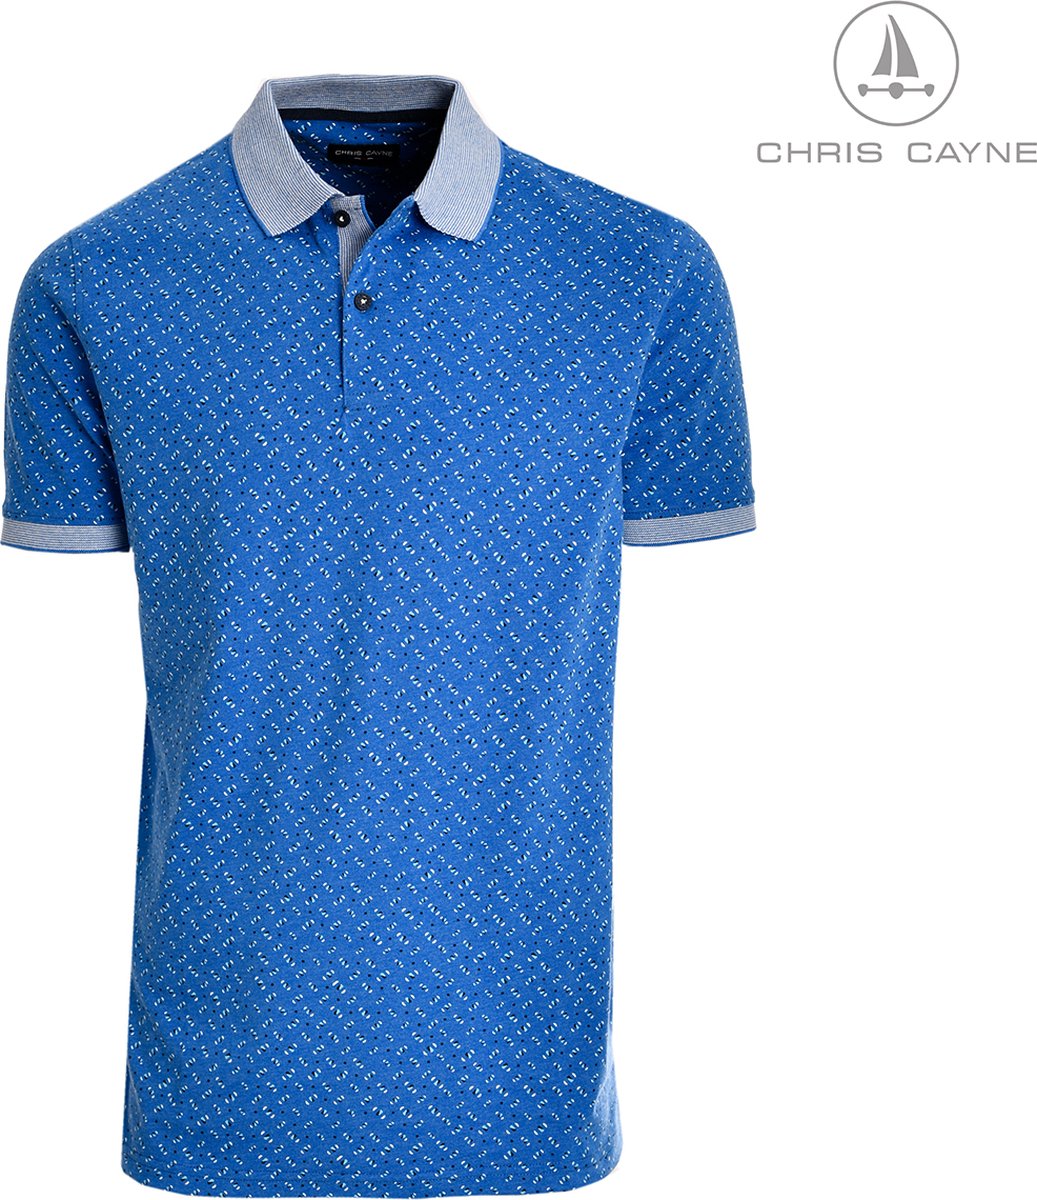 Chris Cayne heren polo - poloshirt 9404 heren - blauw print - Jersey - KM - maat M